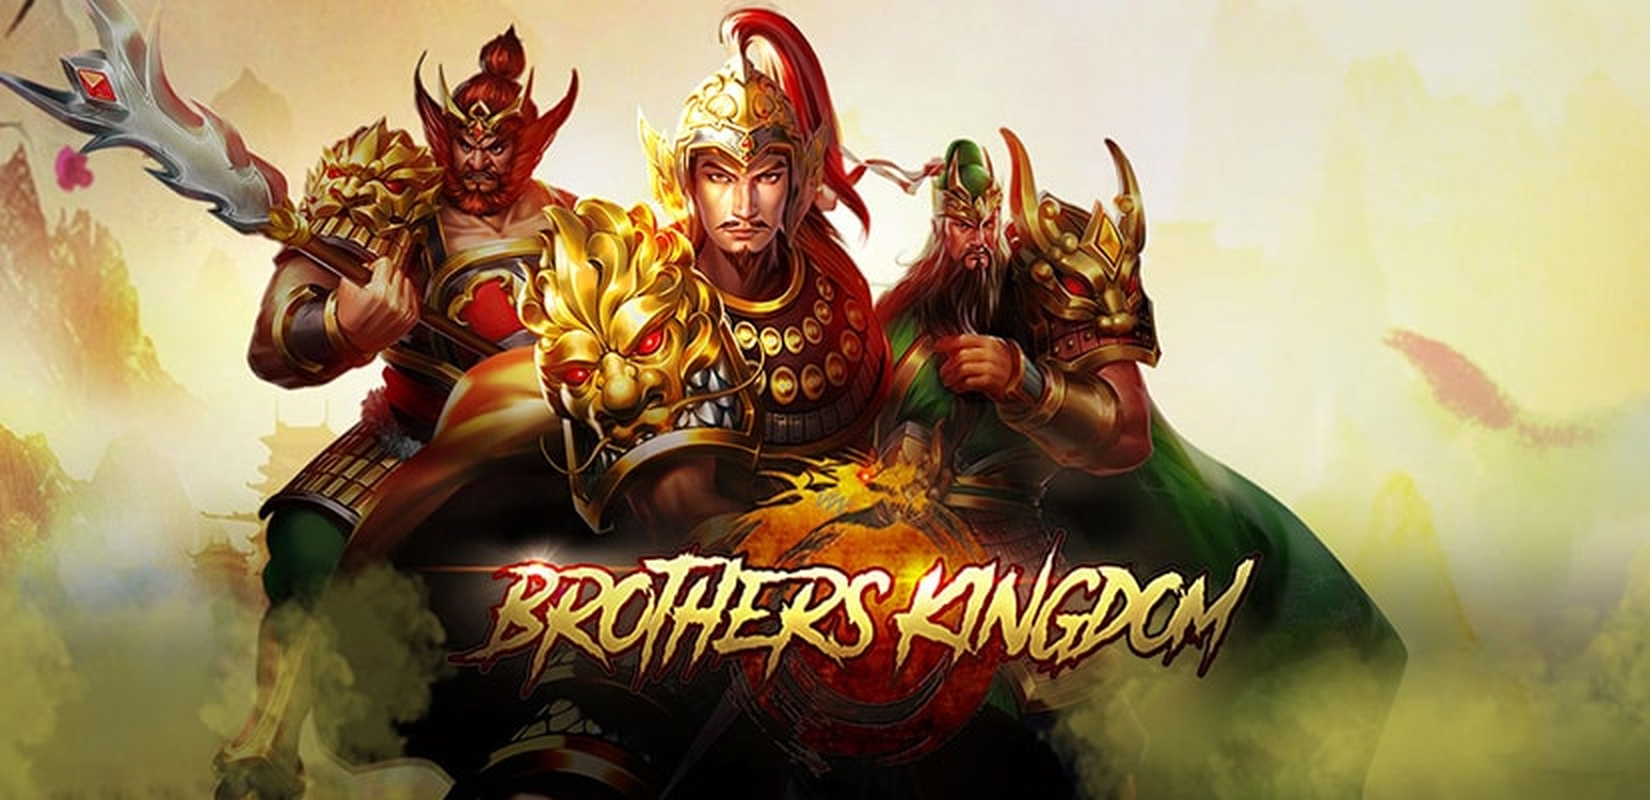 Brothers Kingdom demo